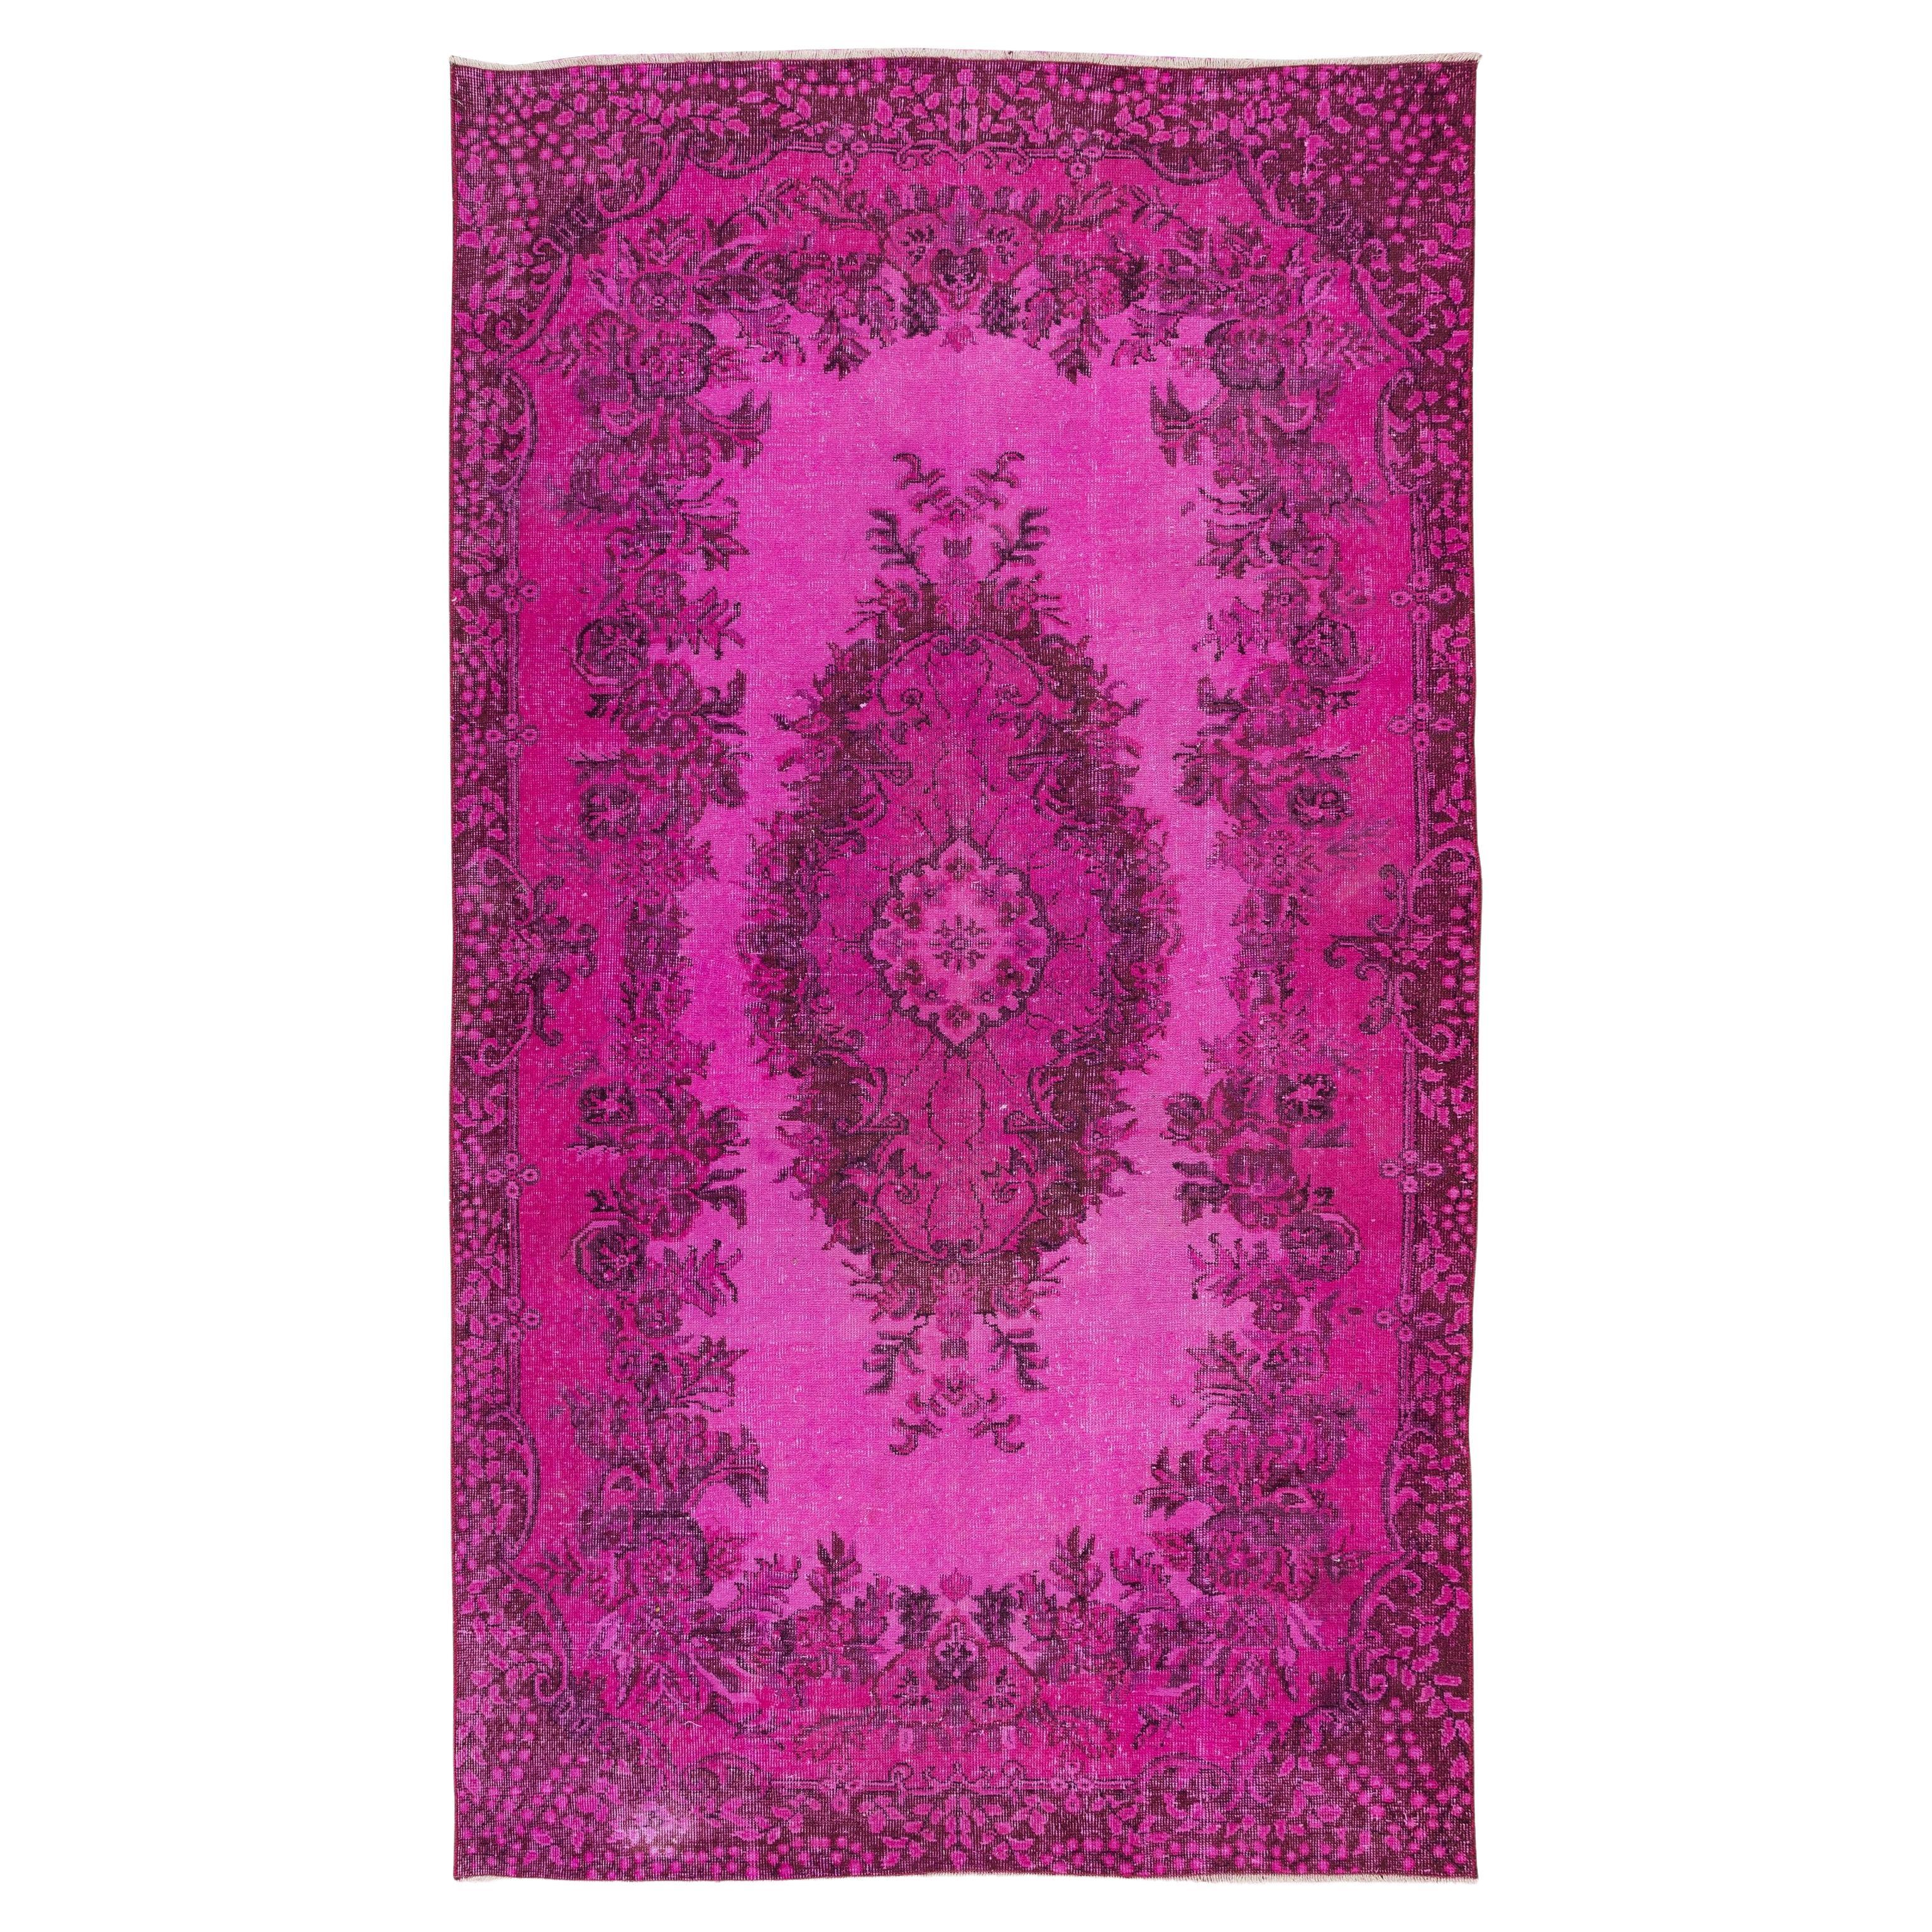 5.4x9.5 Ft Vintage Handmade Turkish Pink Redyed Teppich mit floralem Medaillon Design